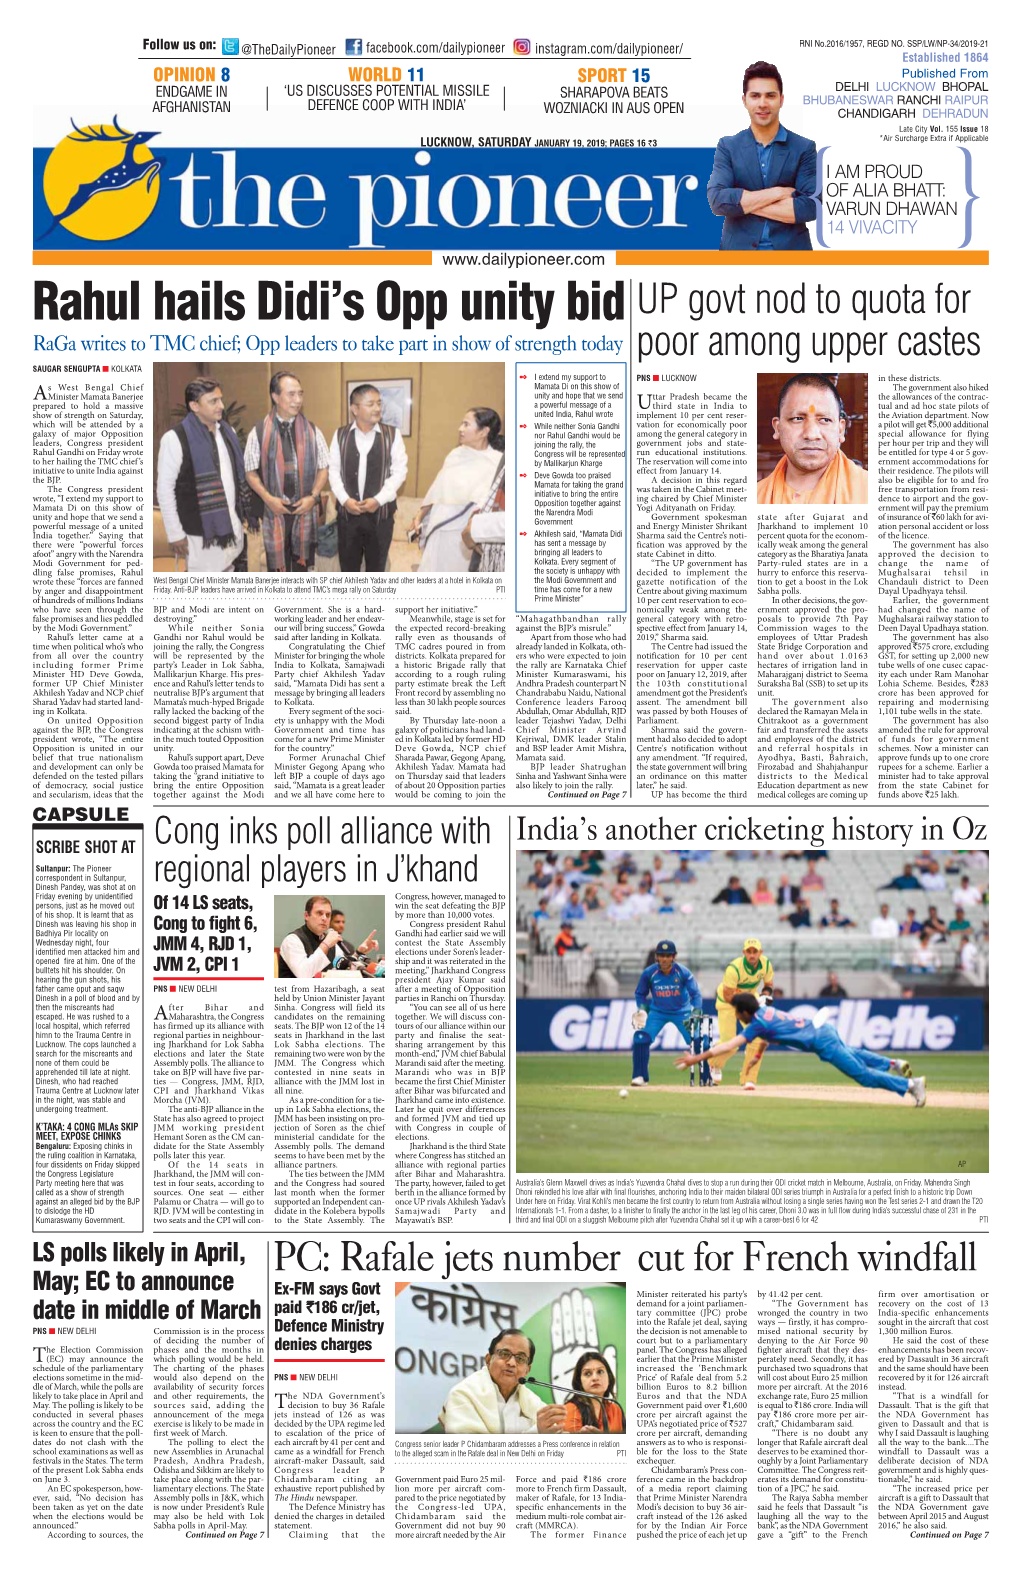 Rahul Hails Didi's Opp Unity